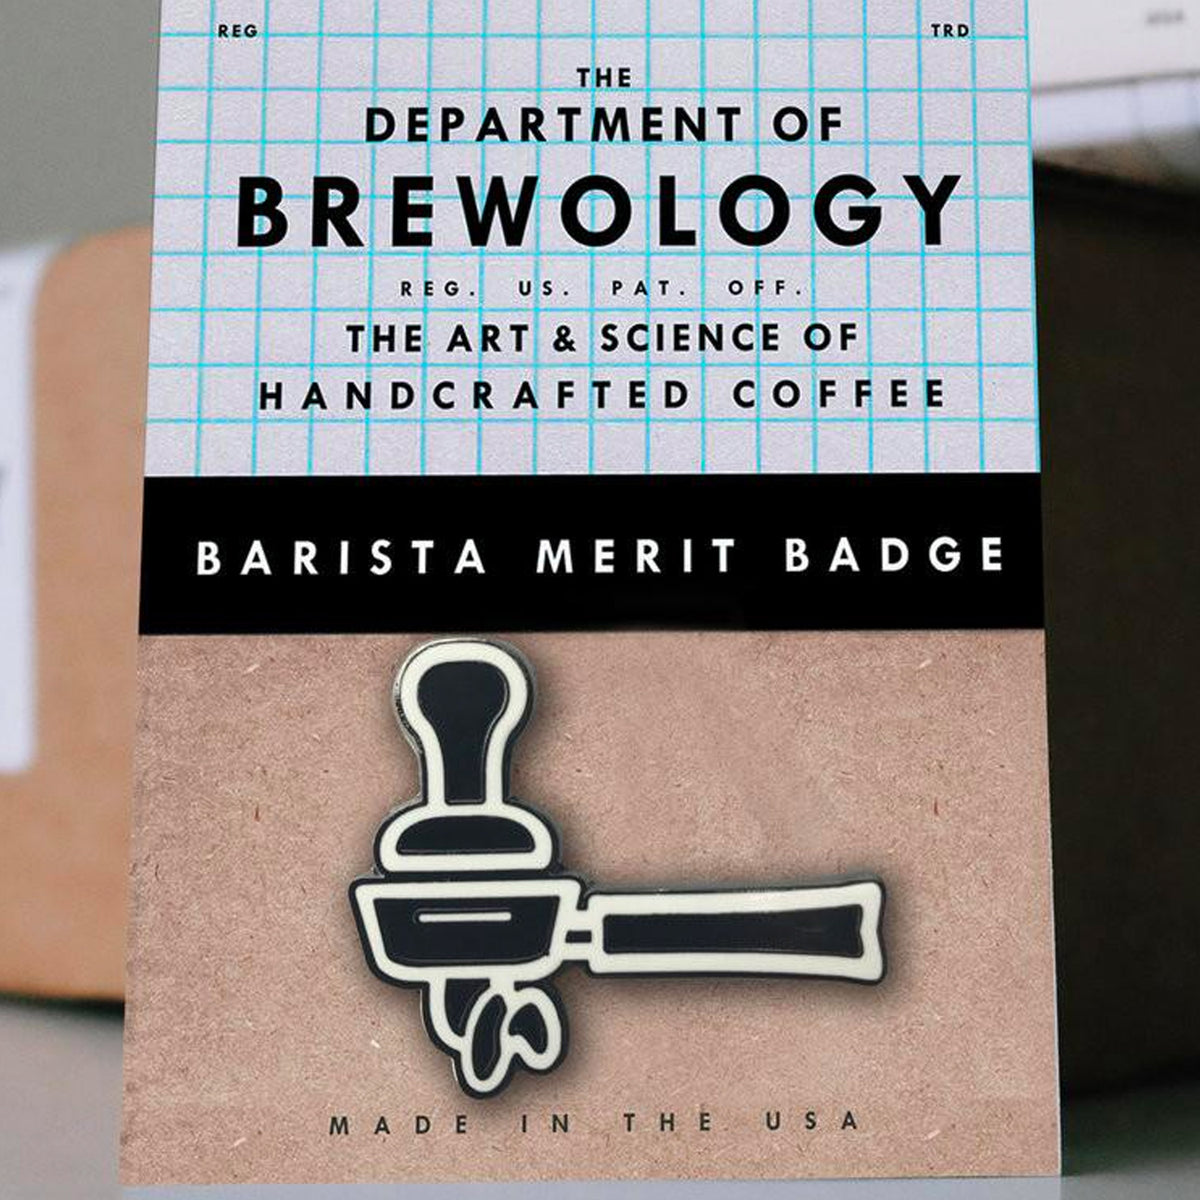 Barista Merit Badge Pins